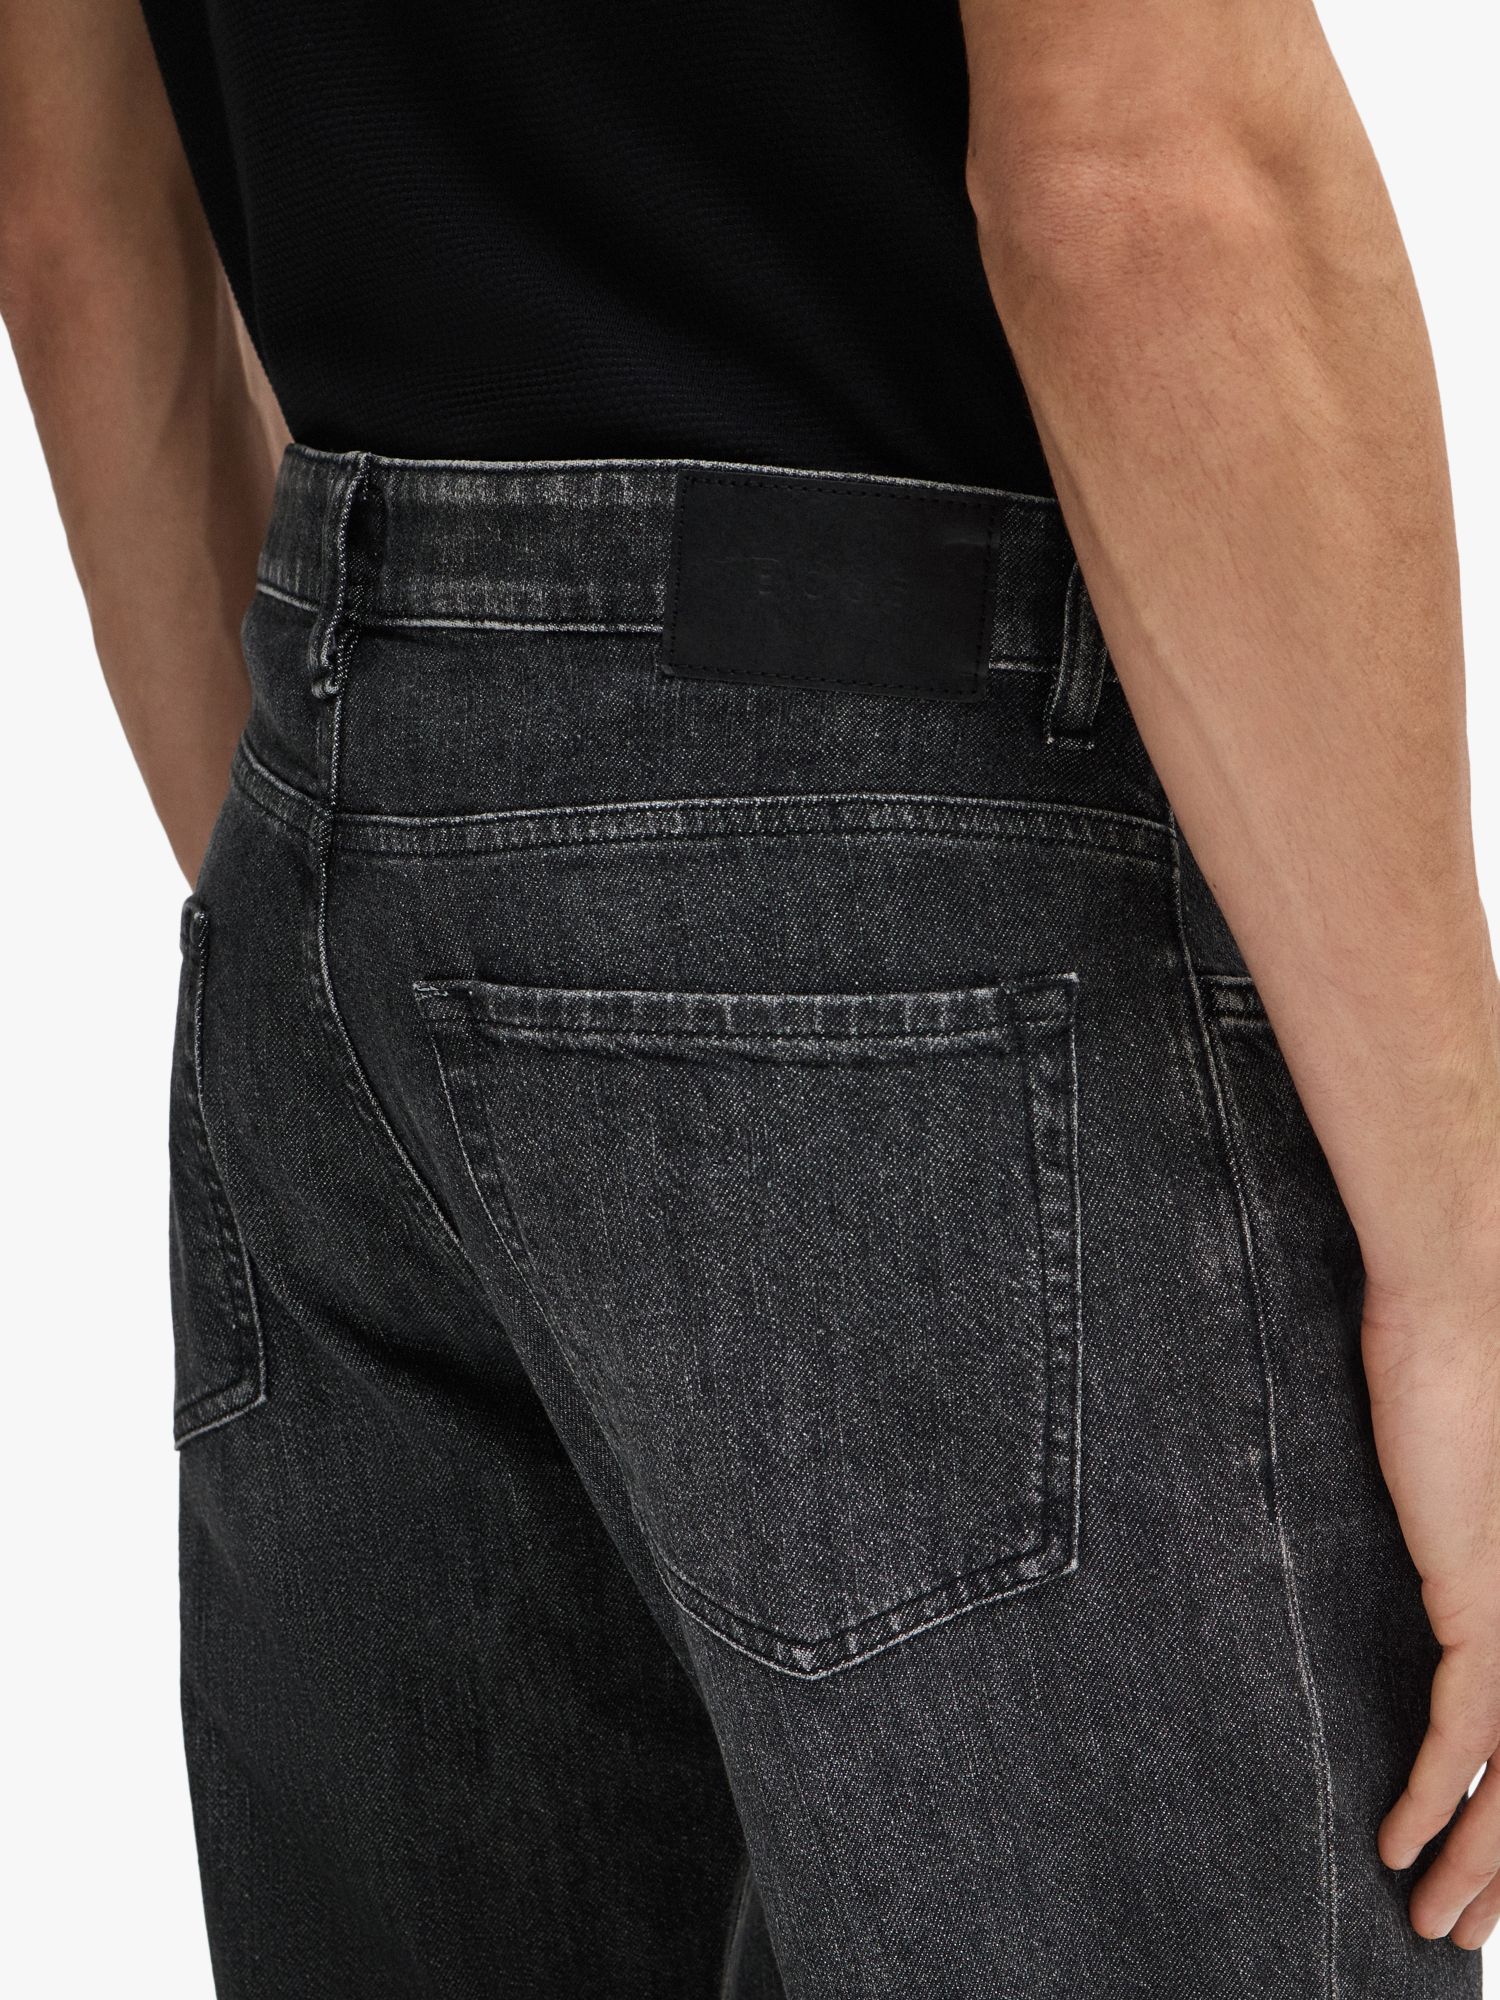 BOSS Maine Regular Fit Jeans, Medium Grey, 32S